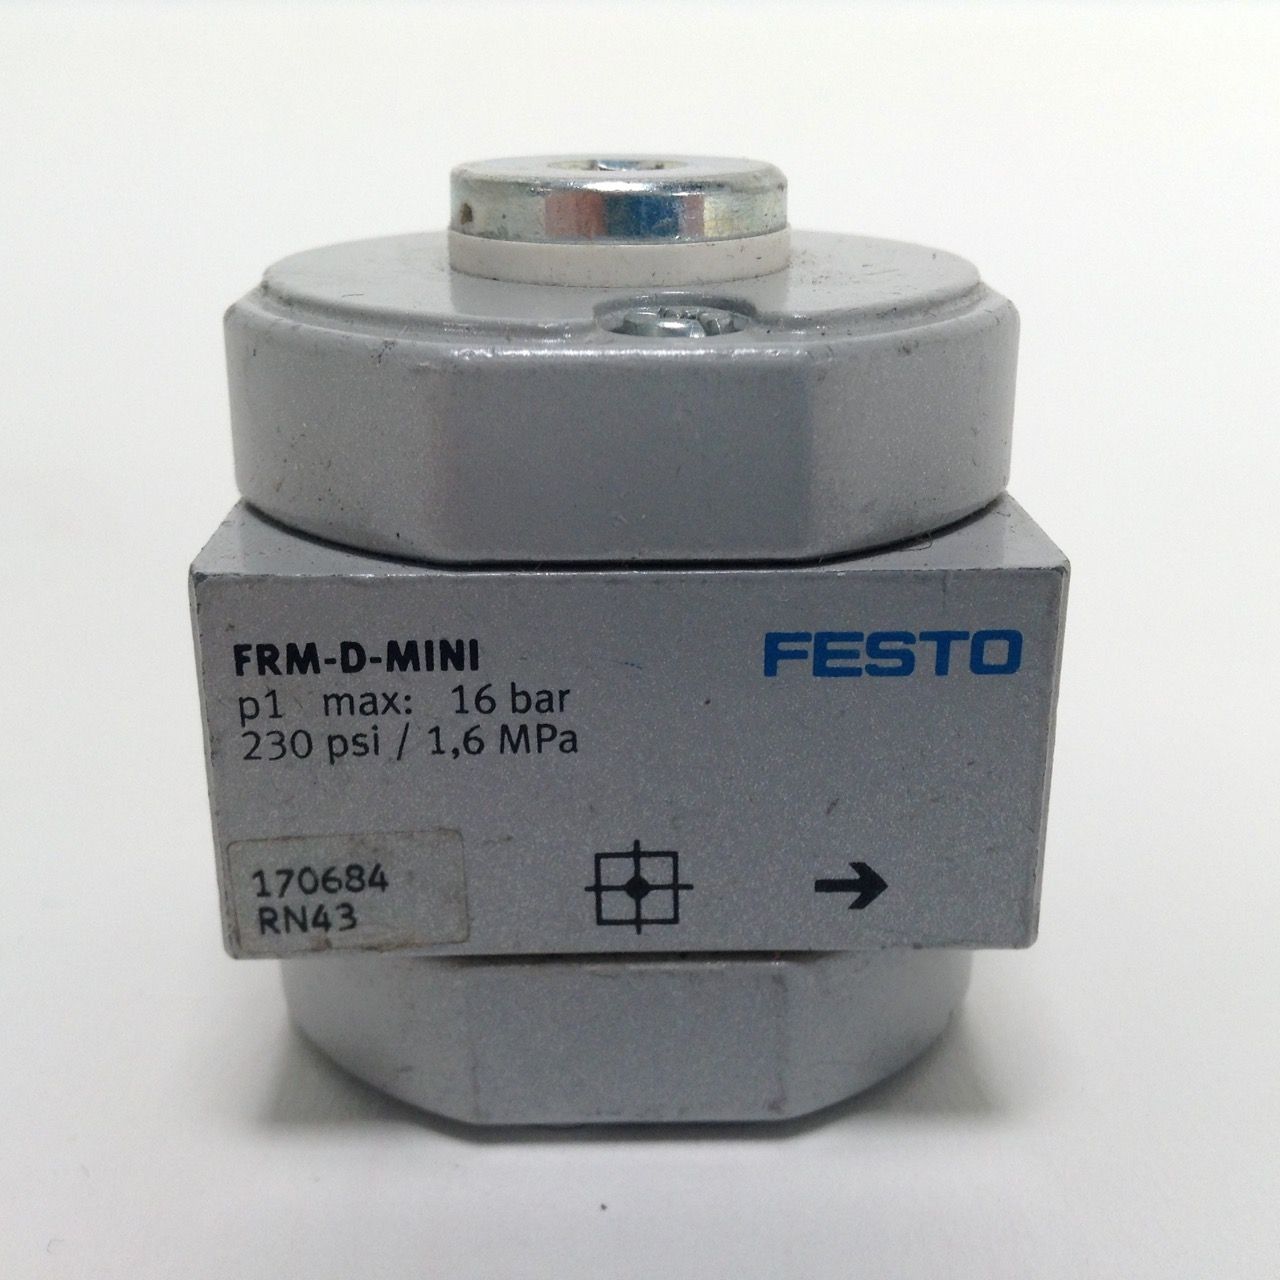 Festo Frm-d-mini 170684 S643 Abzweigmodul for sale online 